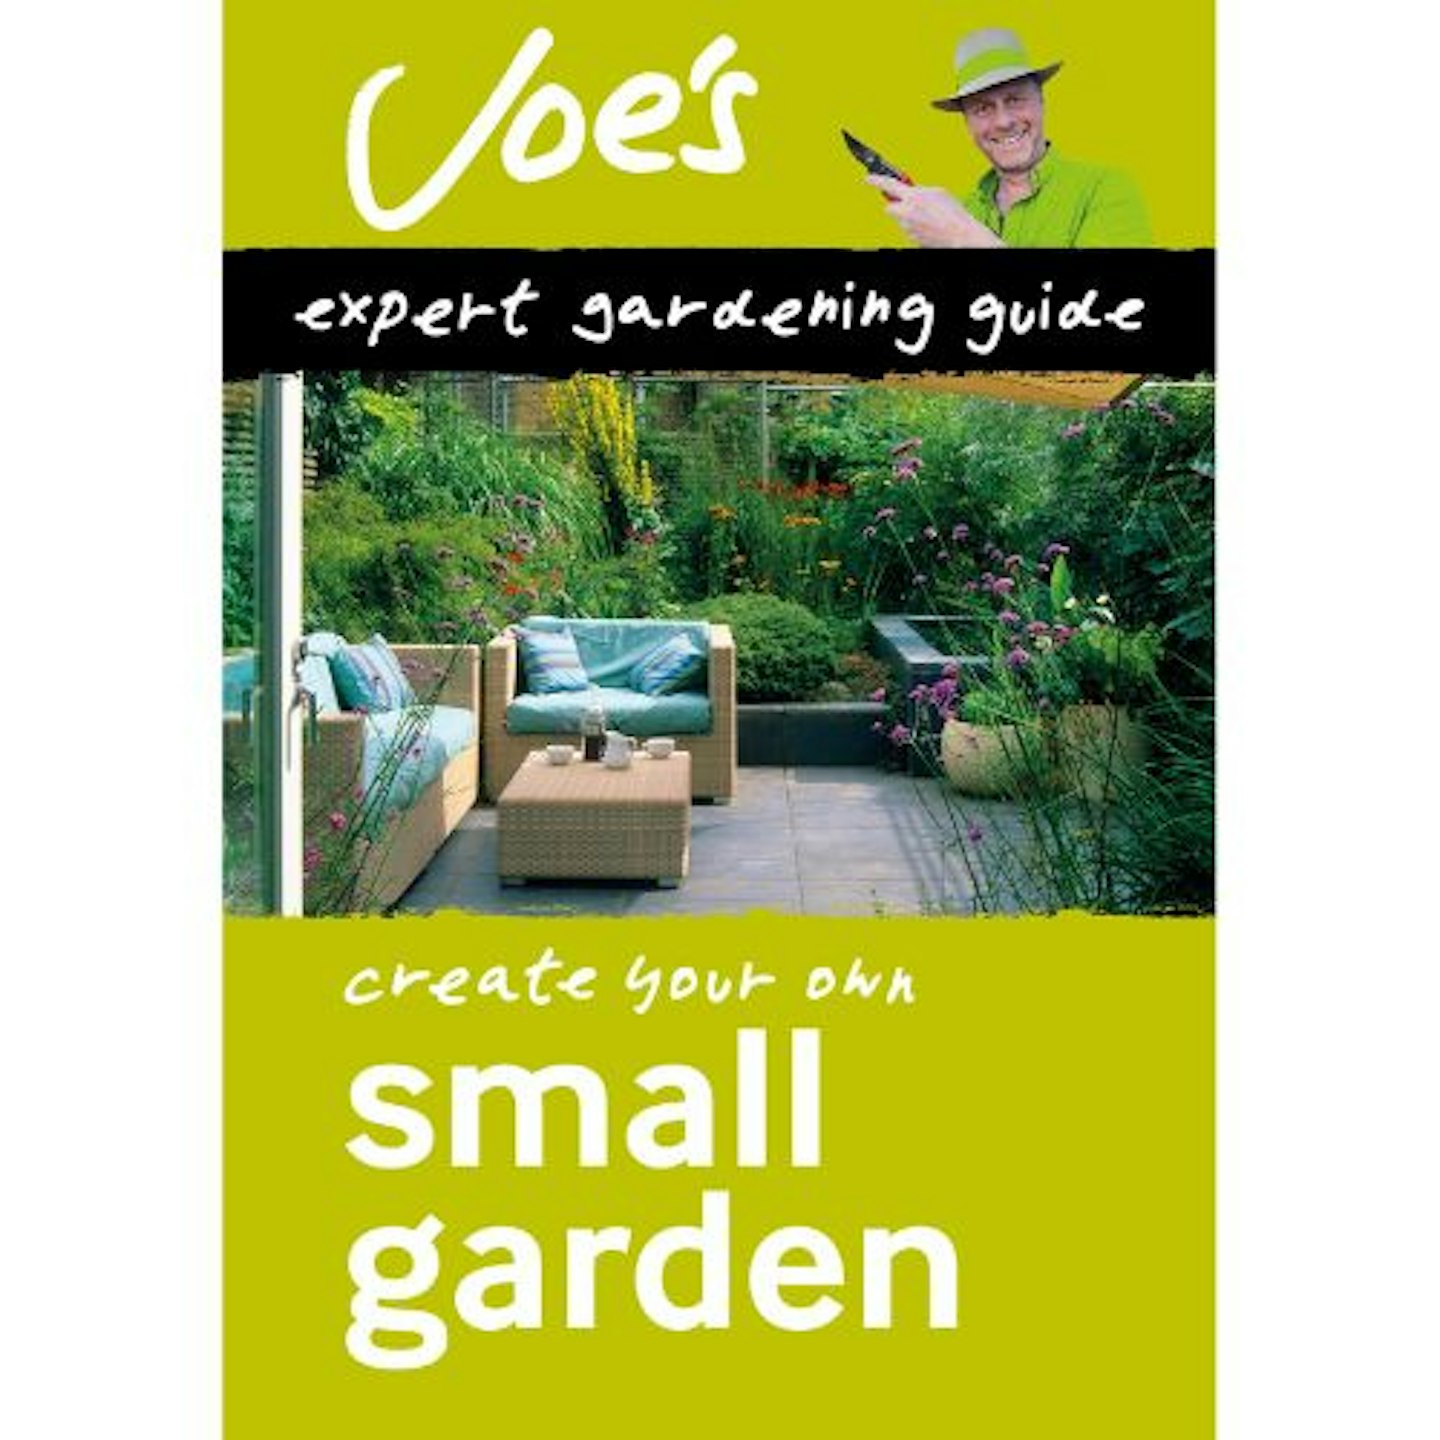 Best Gardening Books for Beginners Small Garden: Design your garden with this gardening book for beginners